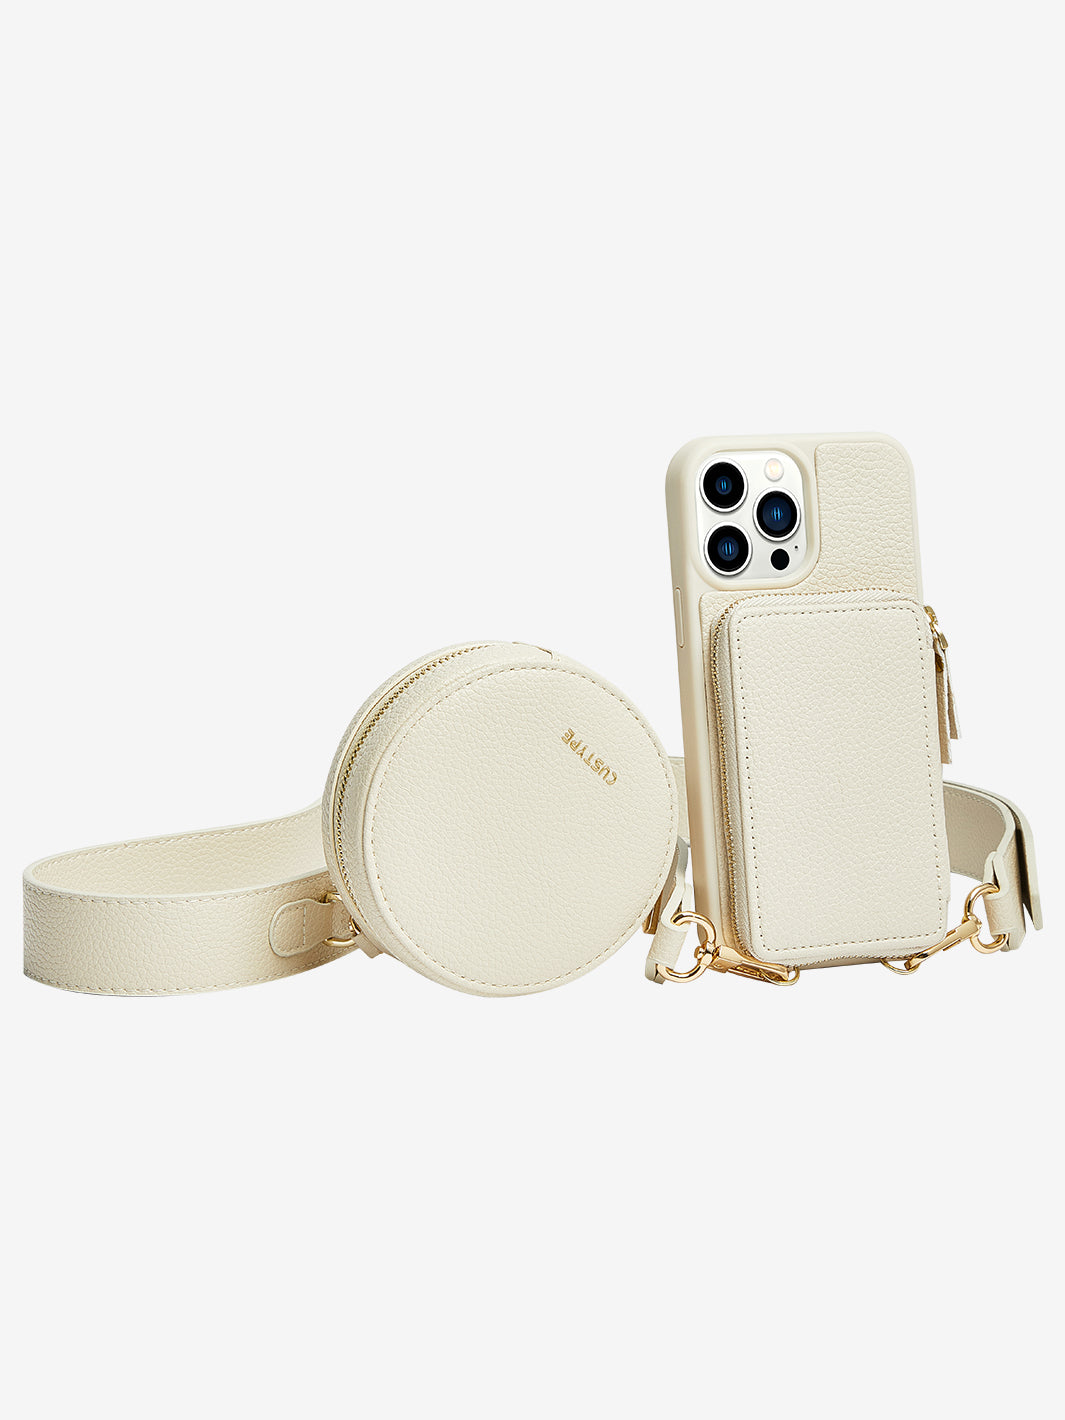 Custype crossbody iPhone case with Round bag beige-07